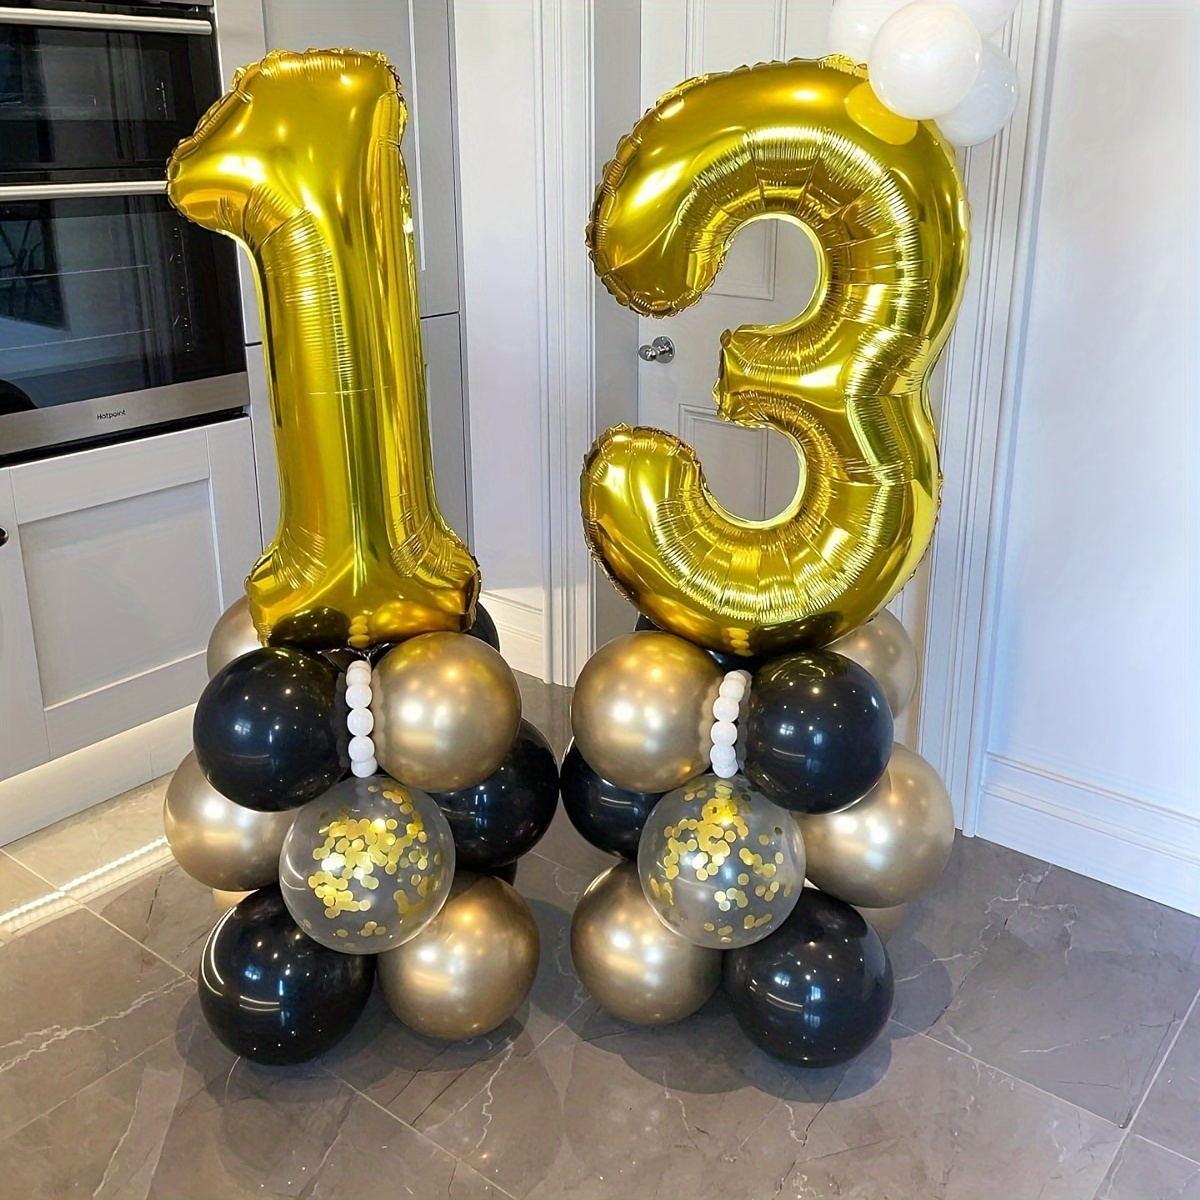 ▷ Conjunto de 10 globos dorados para fiestas ❤️